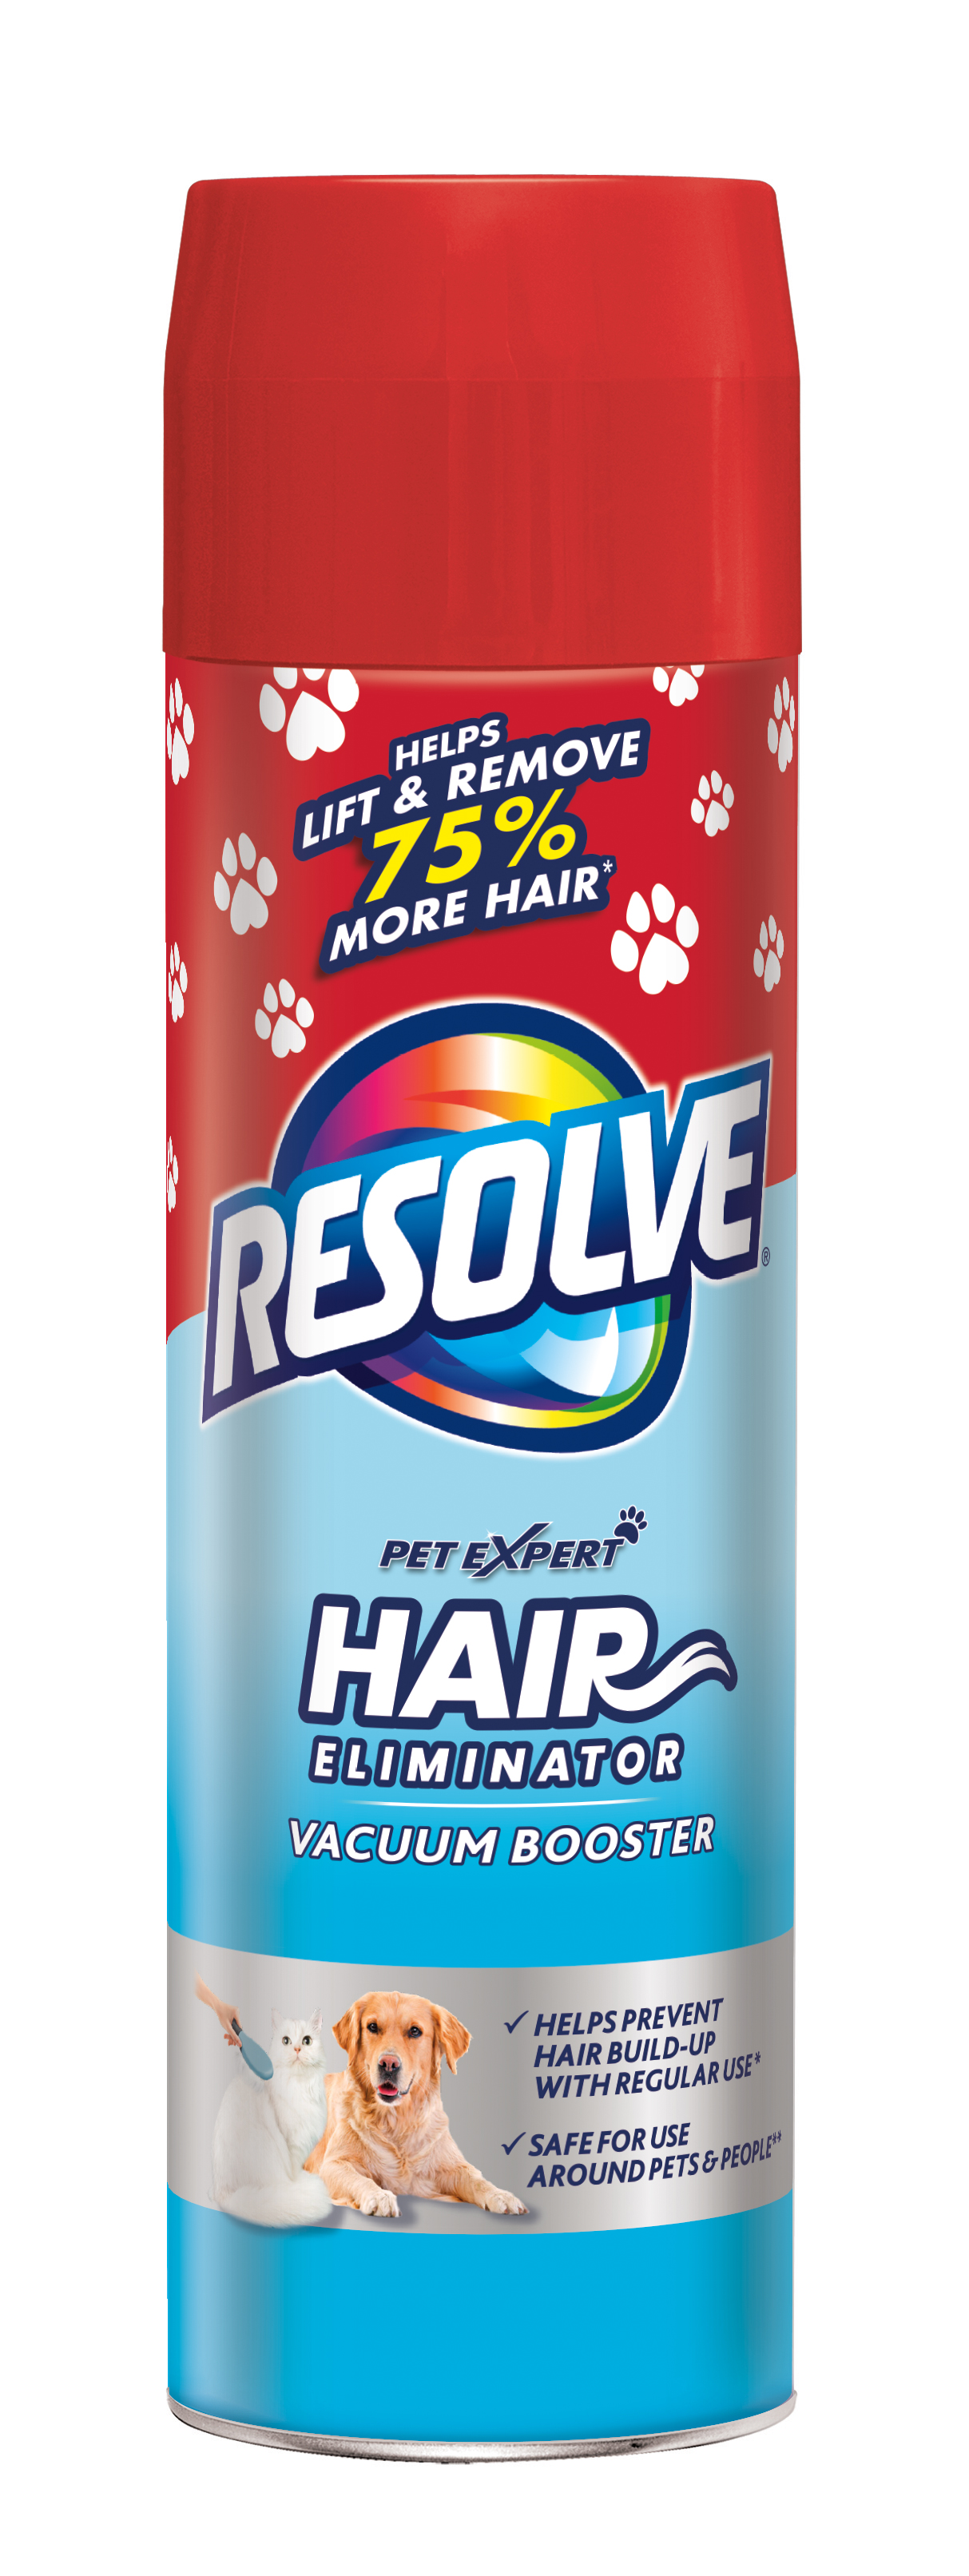 RESOLVE® Pet Expert Hair Eliminator